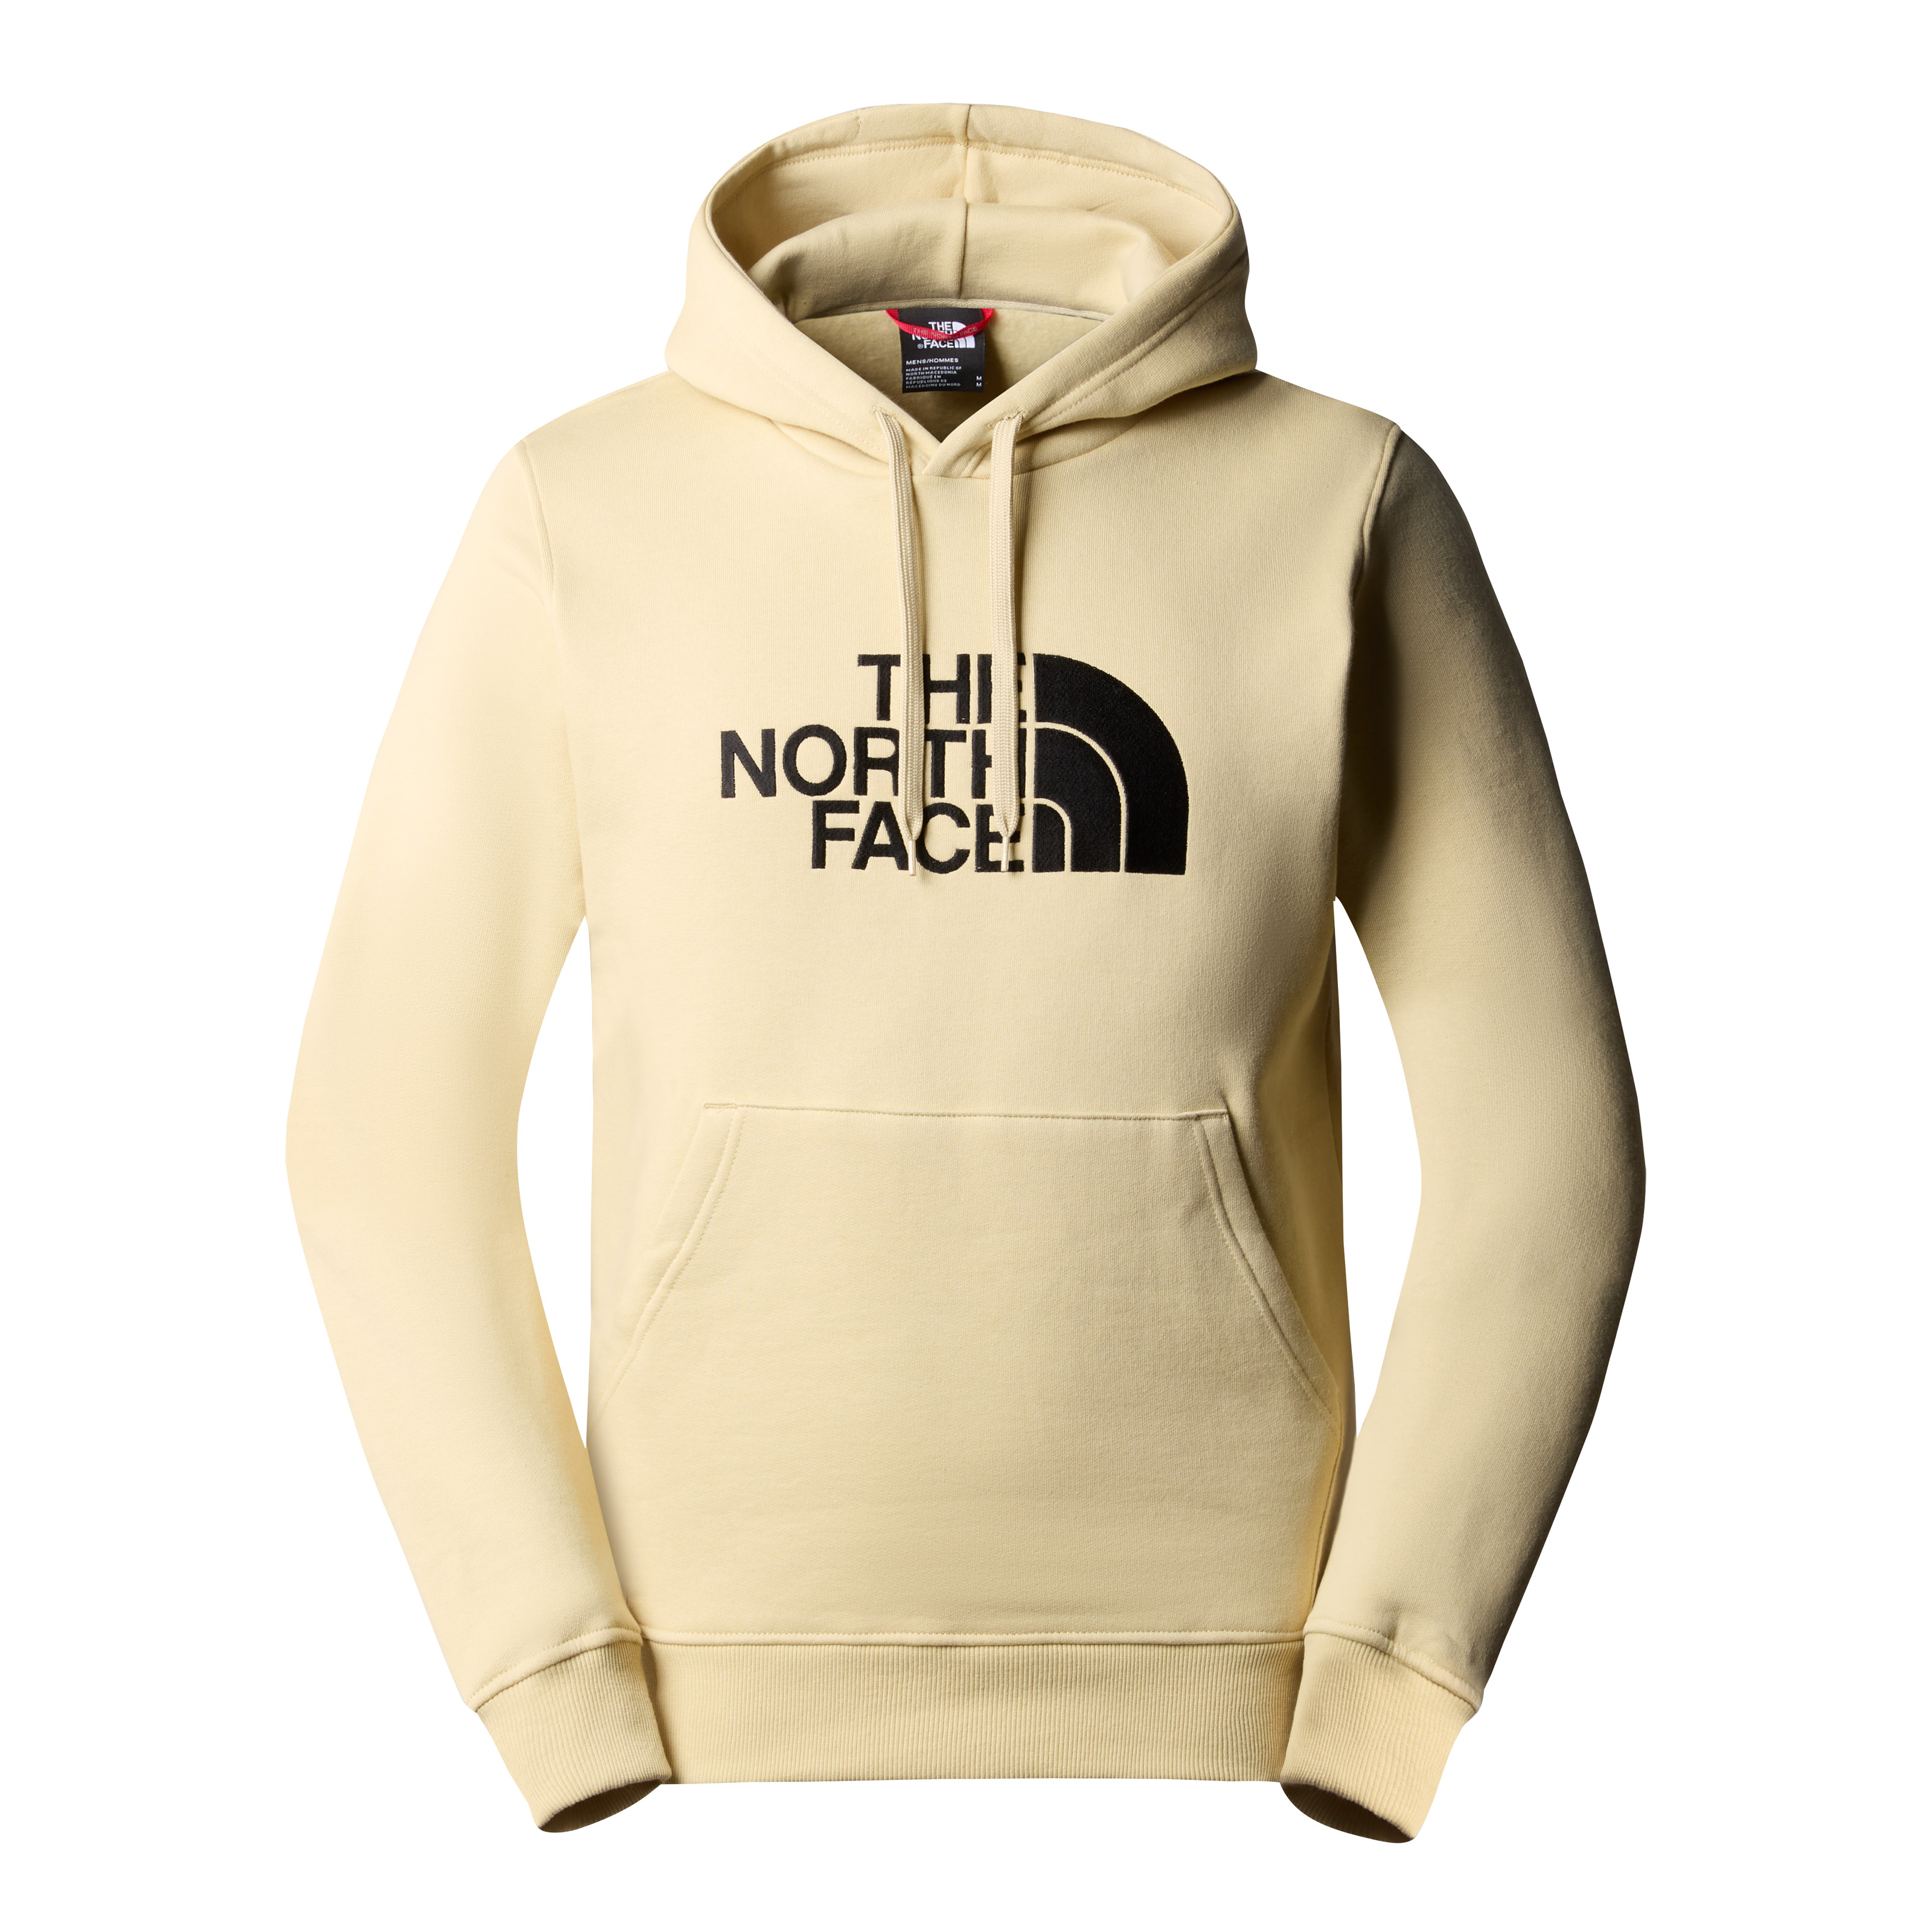 The North Face Mens Drew Peak Pullover Hoodie